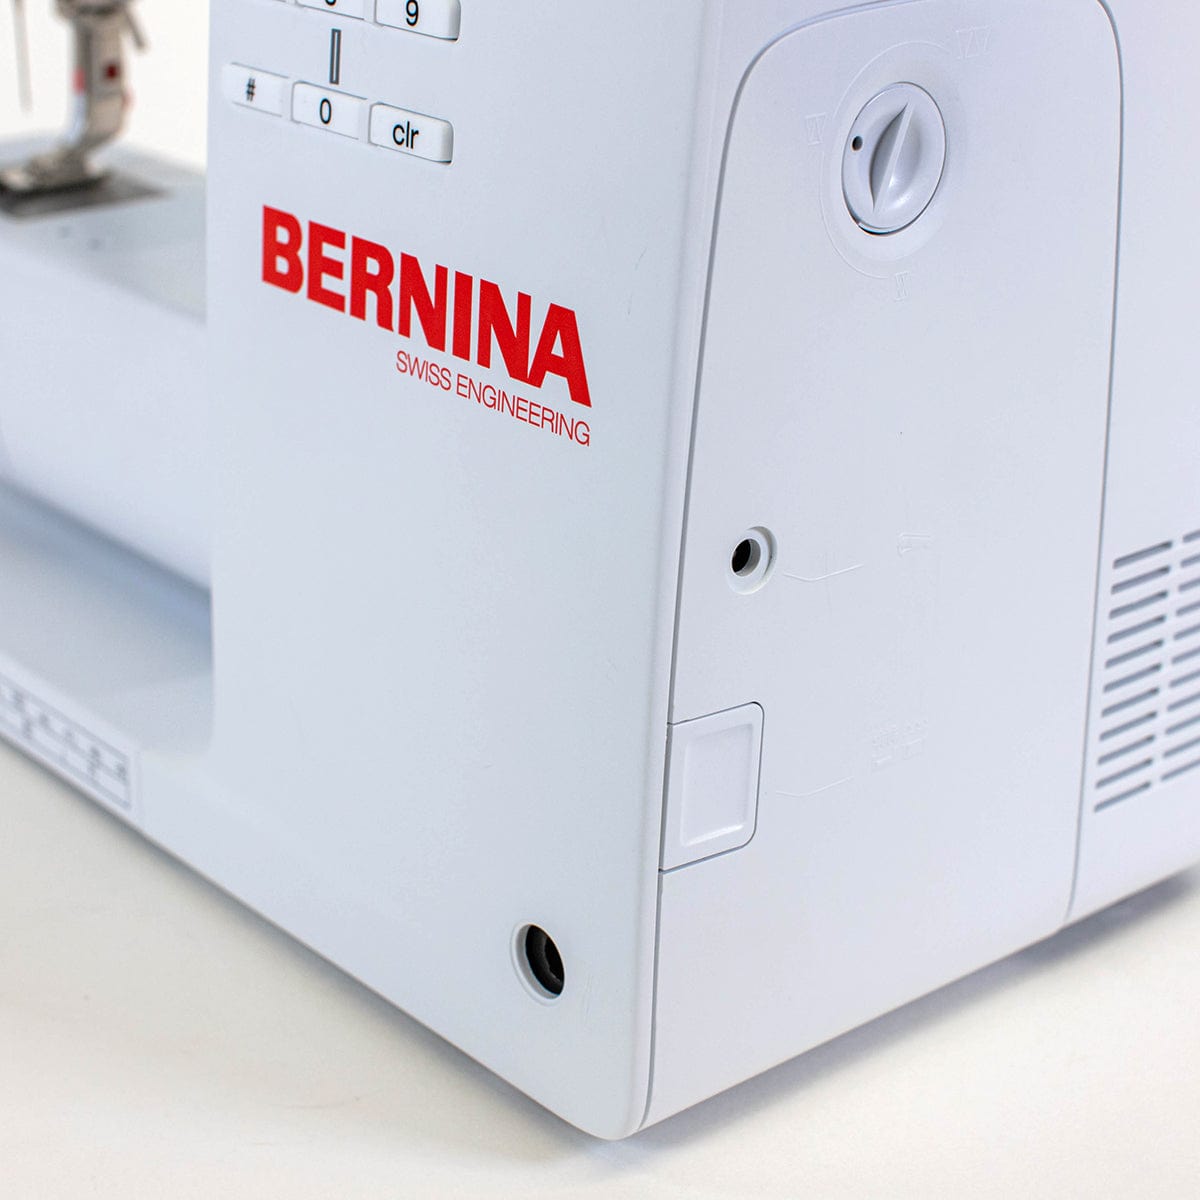 Bernina 335 Sewing Machine + Free Walking Foot Worth £120 for May 24